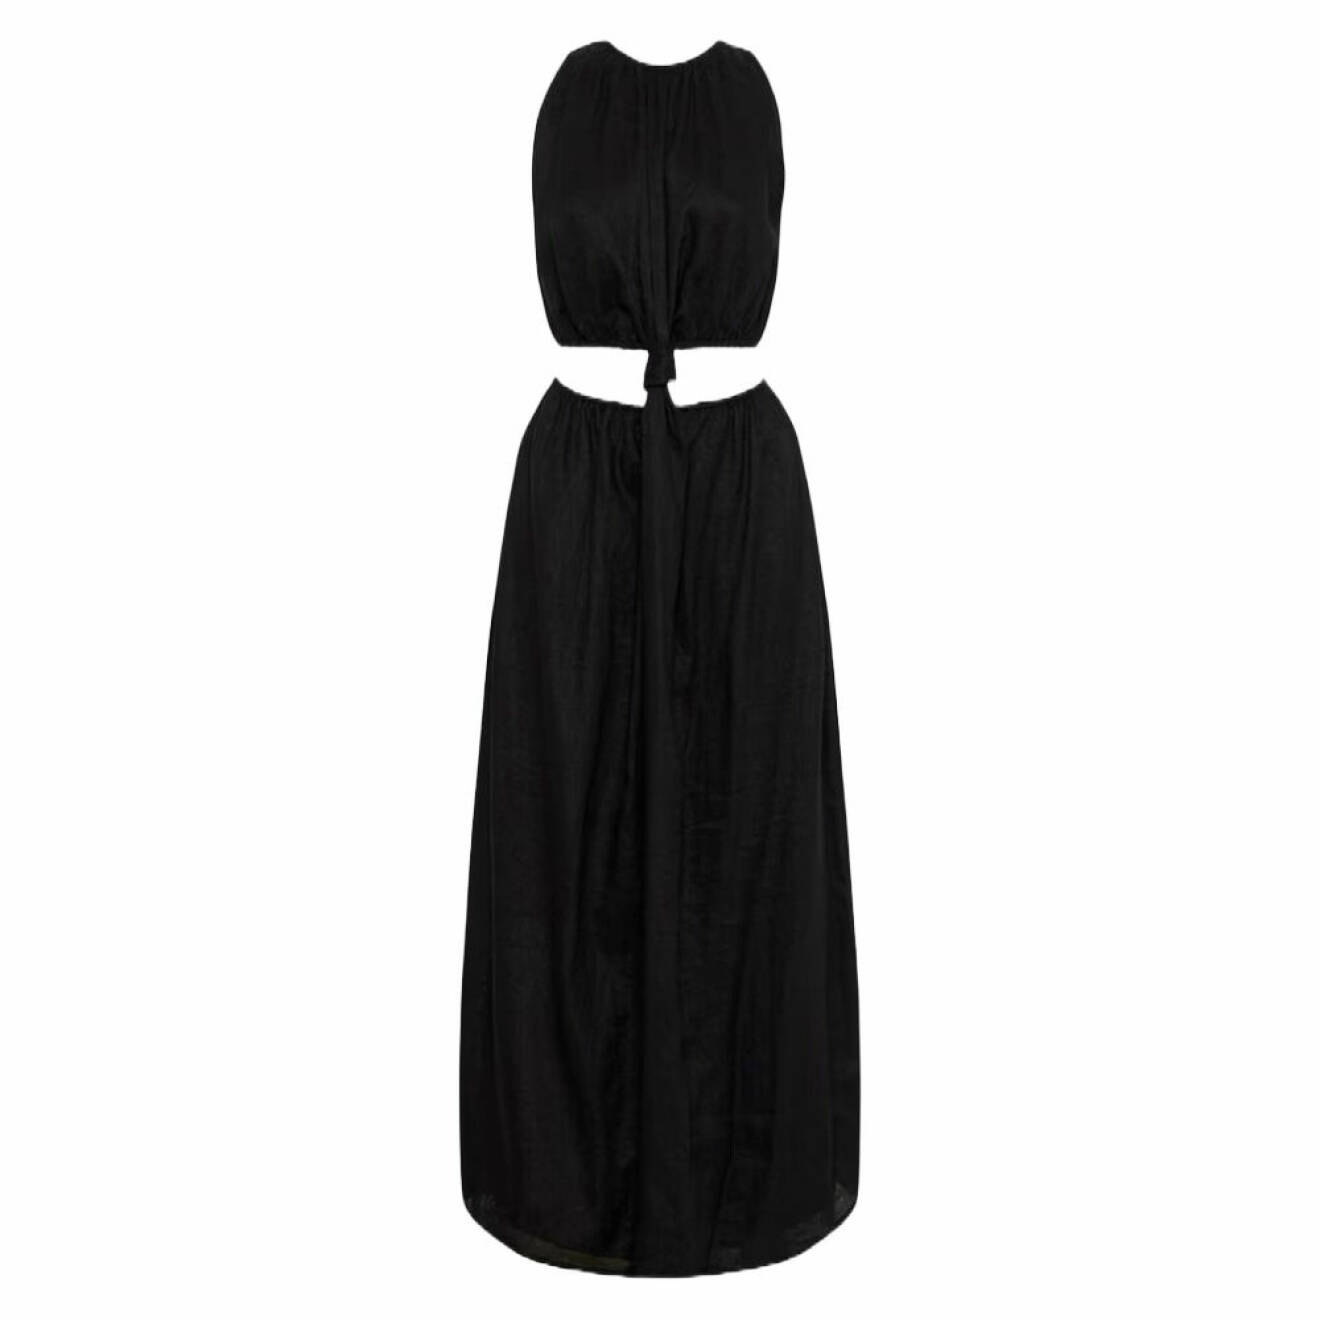 svart klänning i bohemisk stil med cut outs